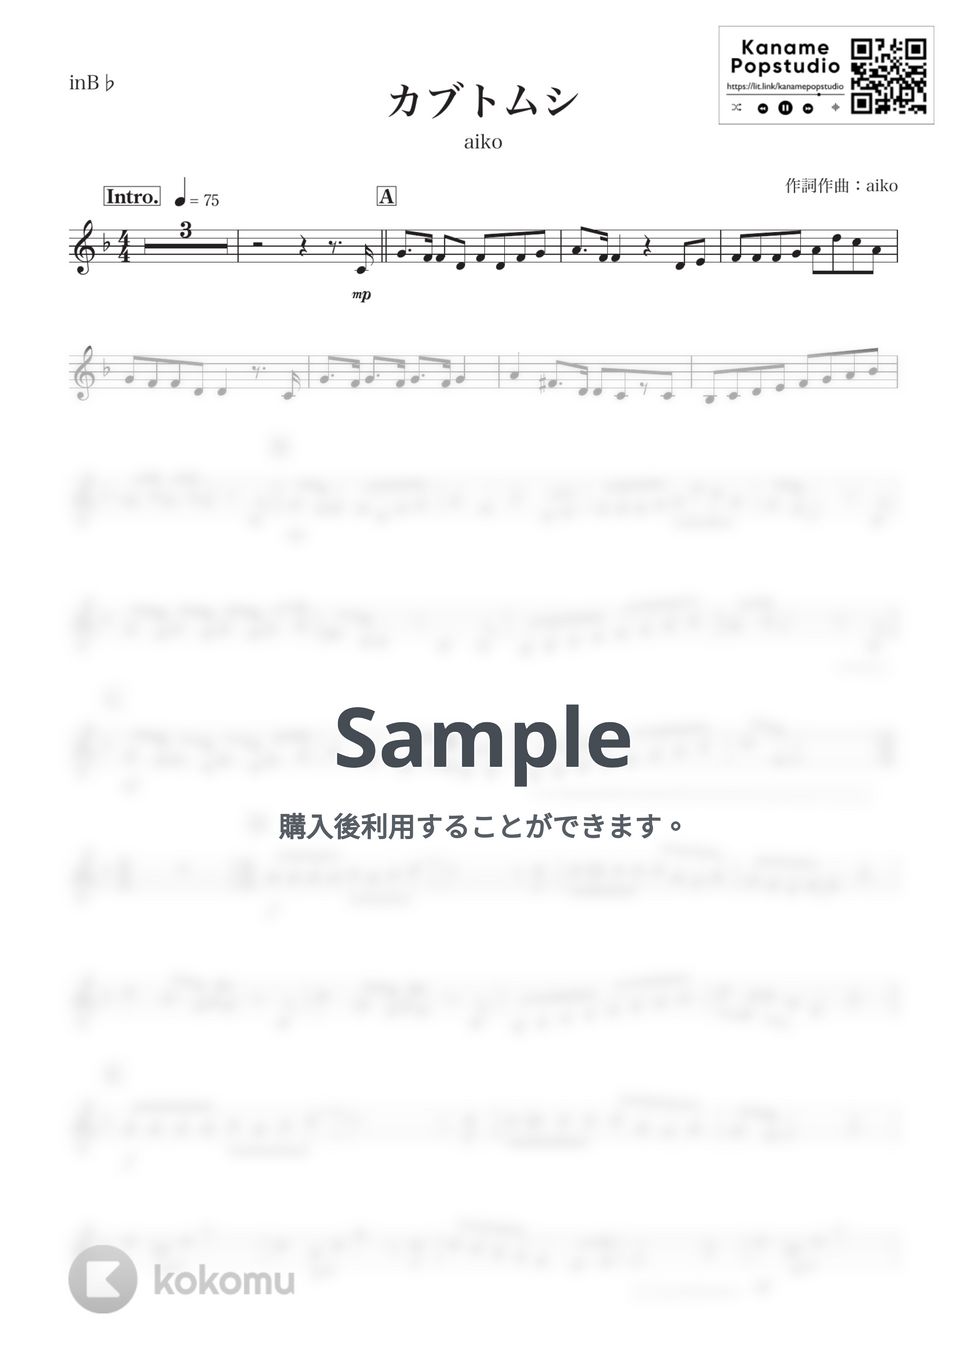 aiko - カブトムシ (B♭) by kanamusic